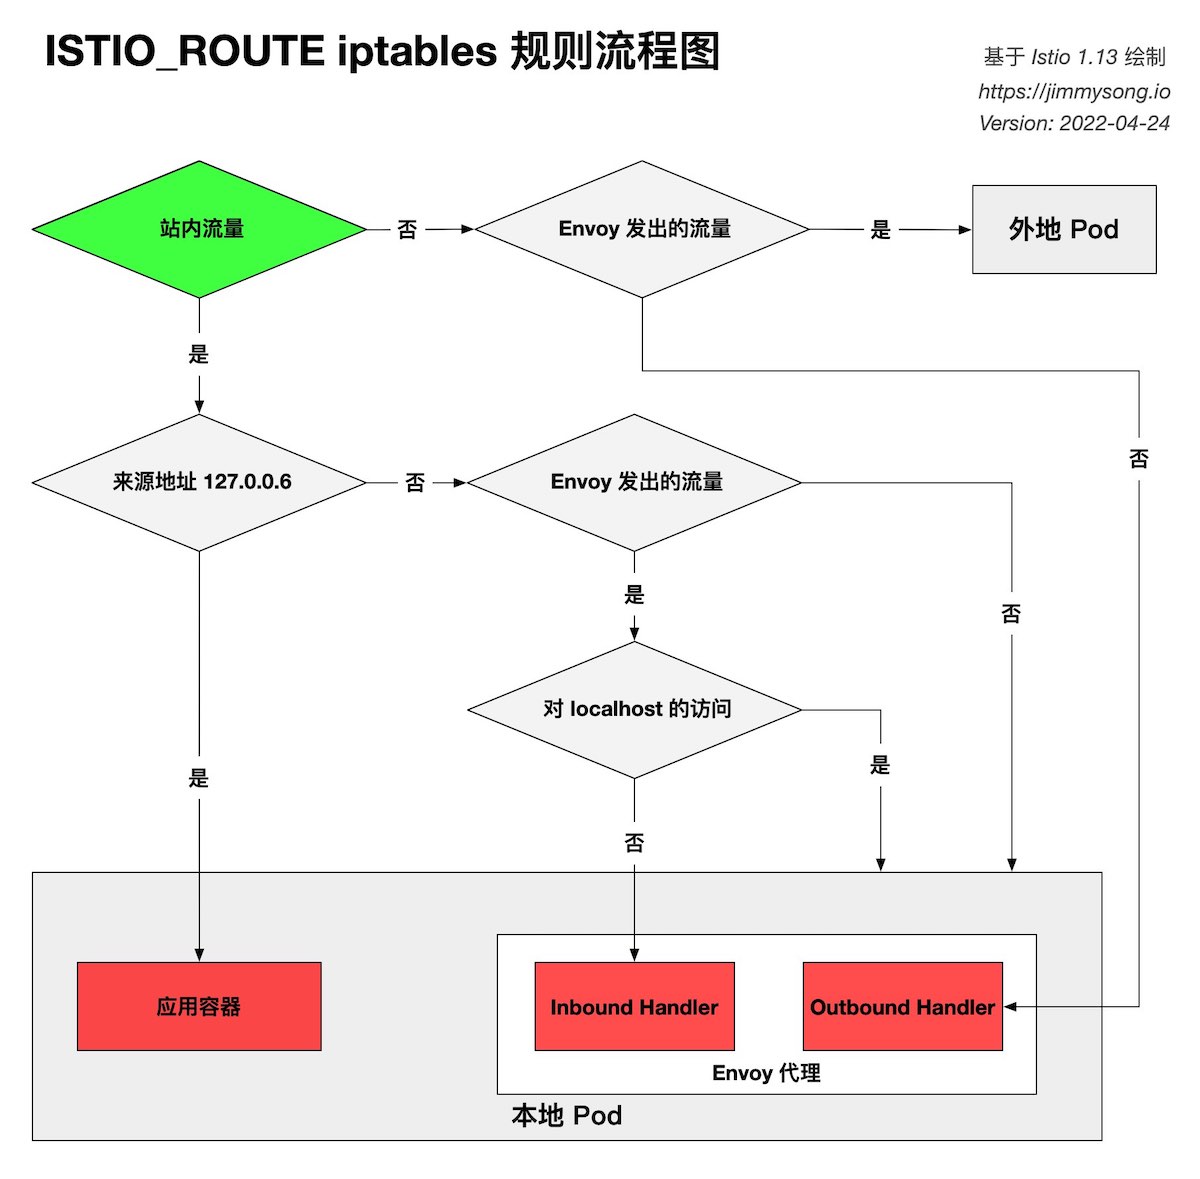 ISTIO_ROUTE iptables 规则流程图